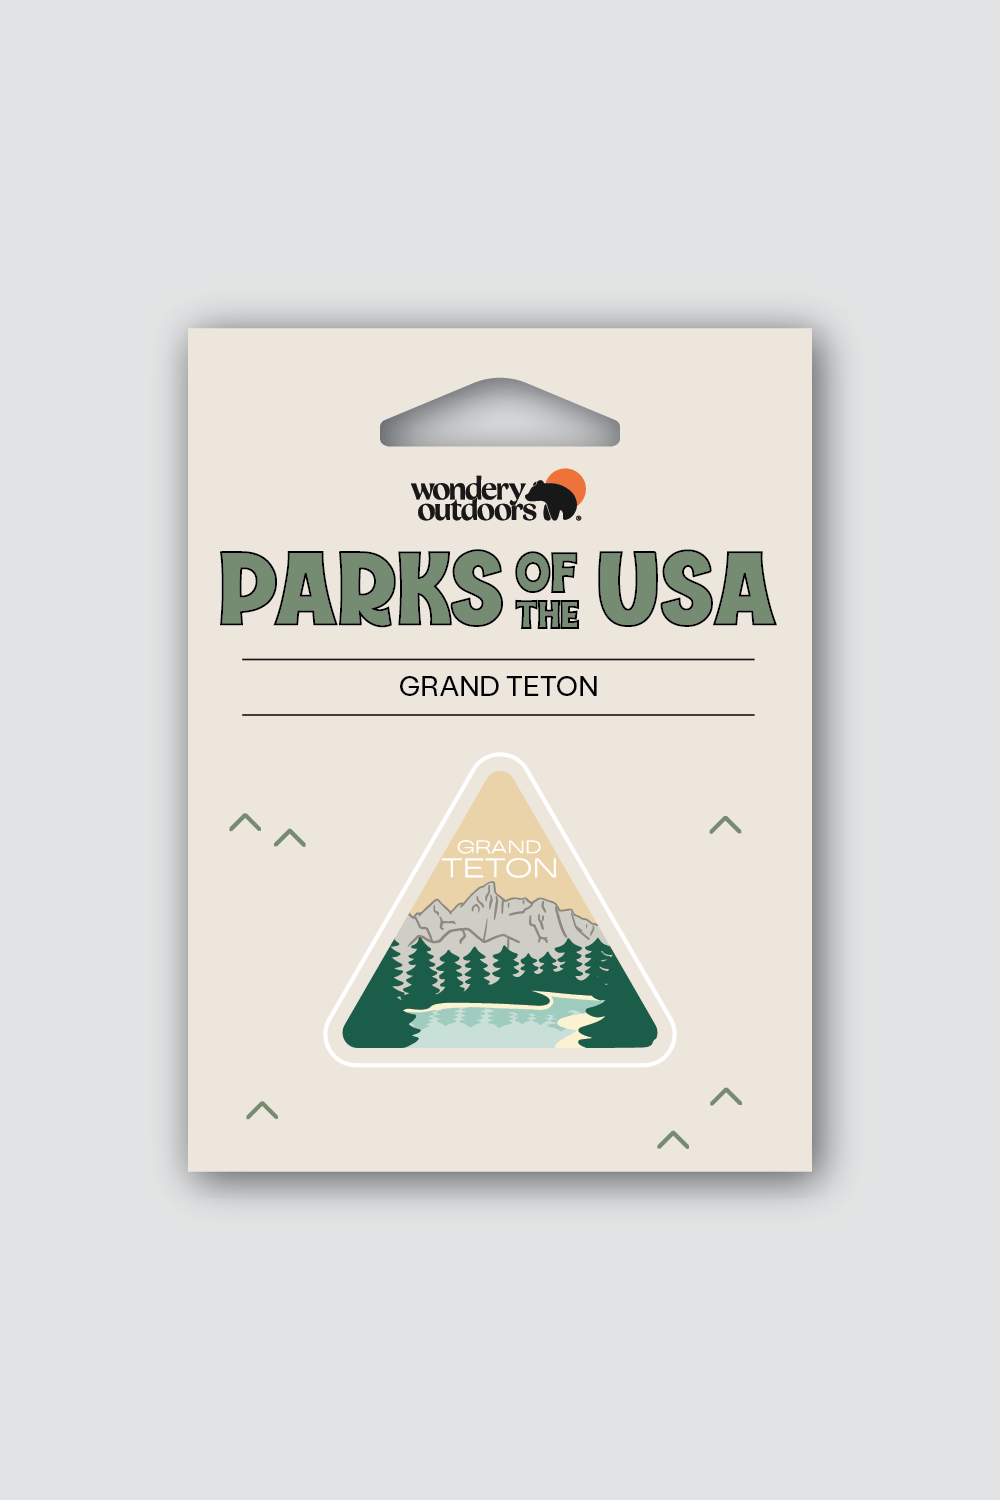 #national park_grand teton _USA National Parks souvenir sticker gift sets